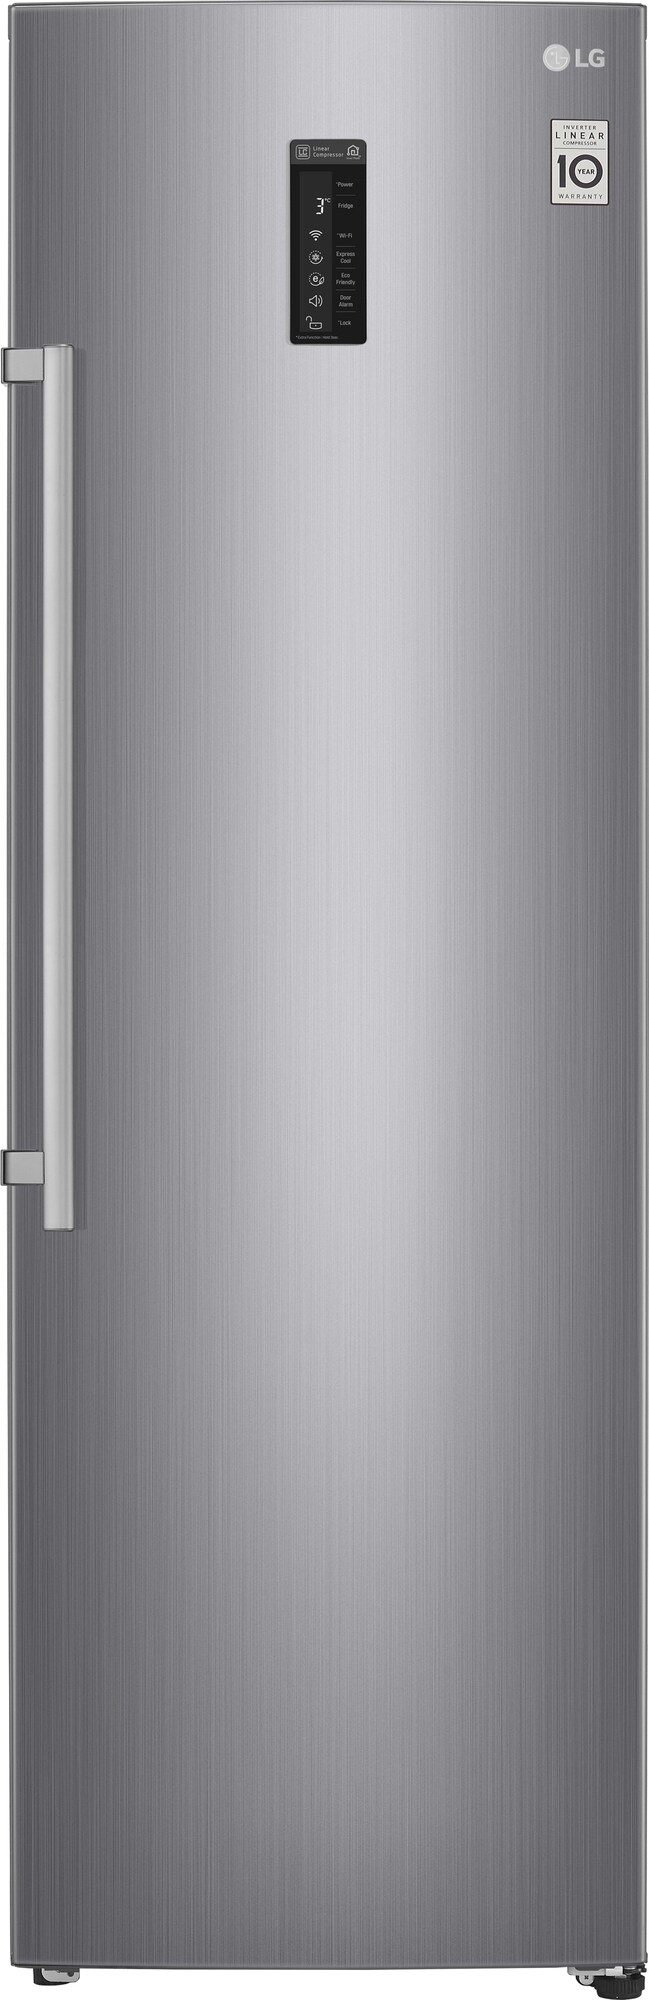 LG køleskab KL5241PZJZ thumbnail